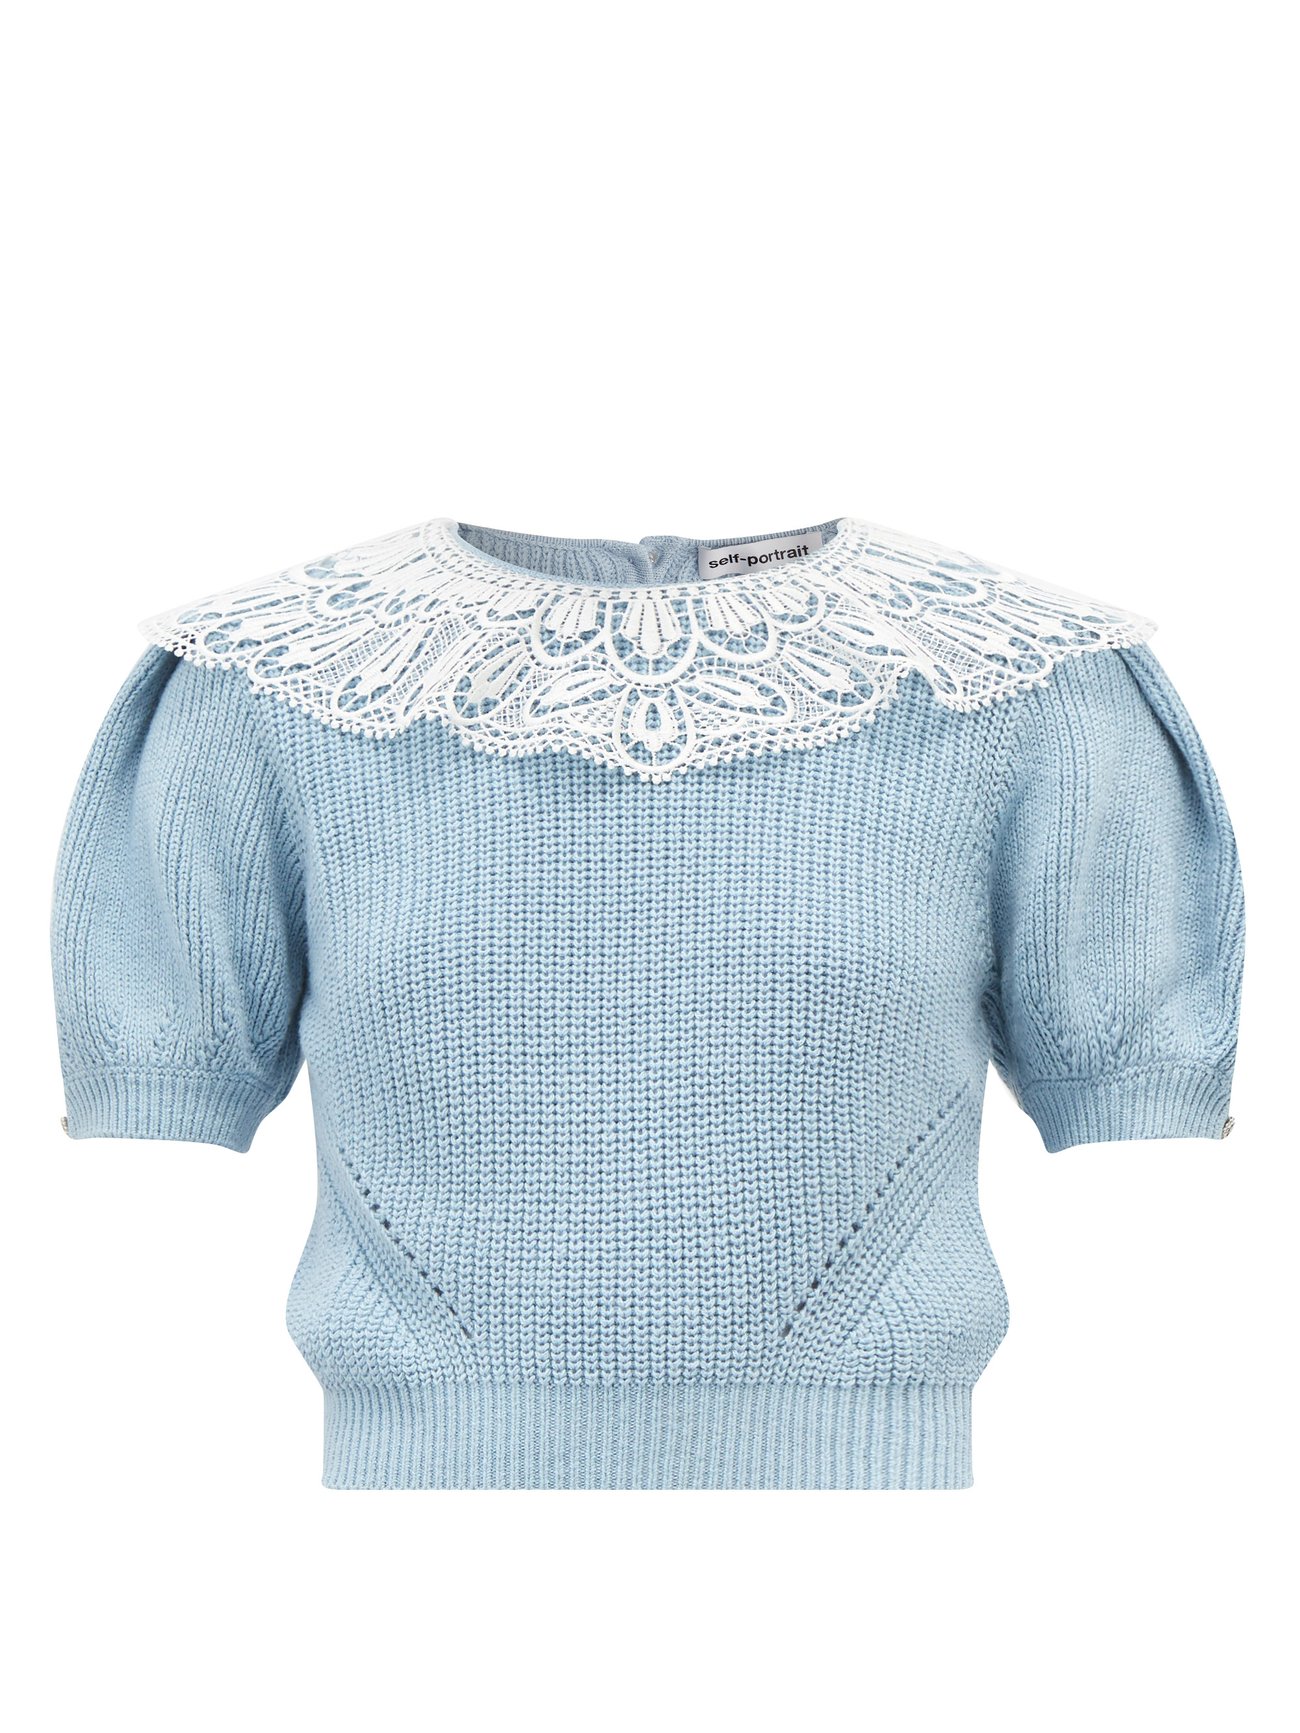 Blue Lace-trimmed crystal-embellished sweater | Self-Portrait ...